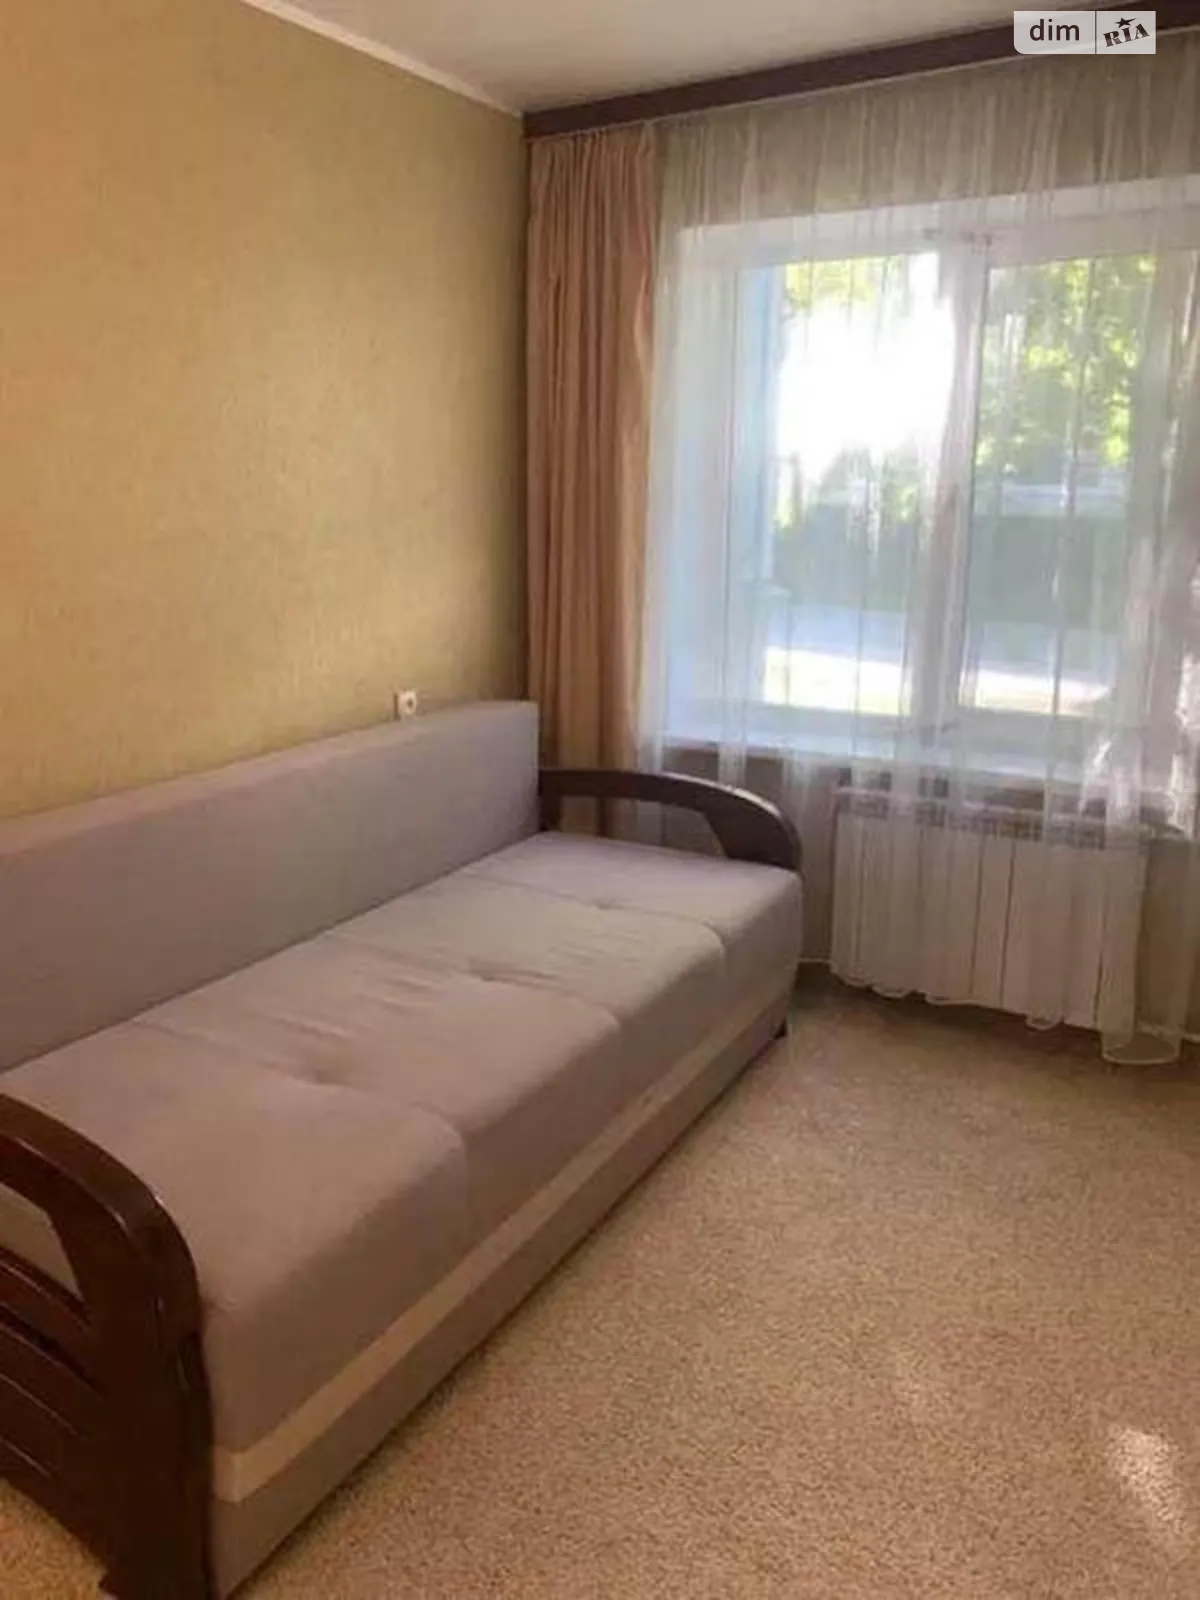 Продается комната 26 кв. м в Киеве, цена: 35300 $ - фото 1